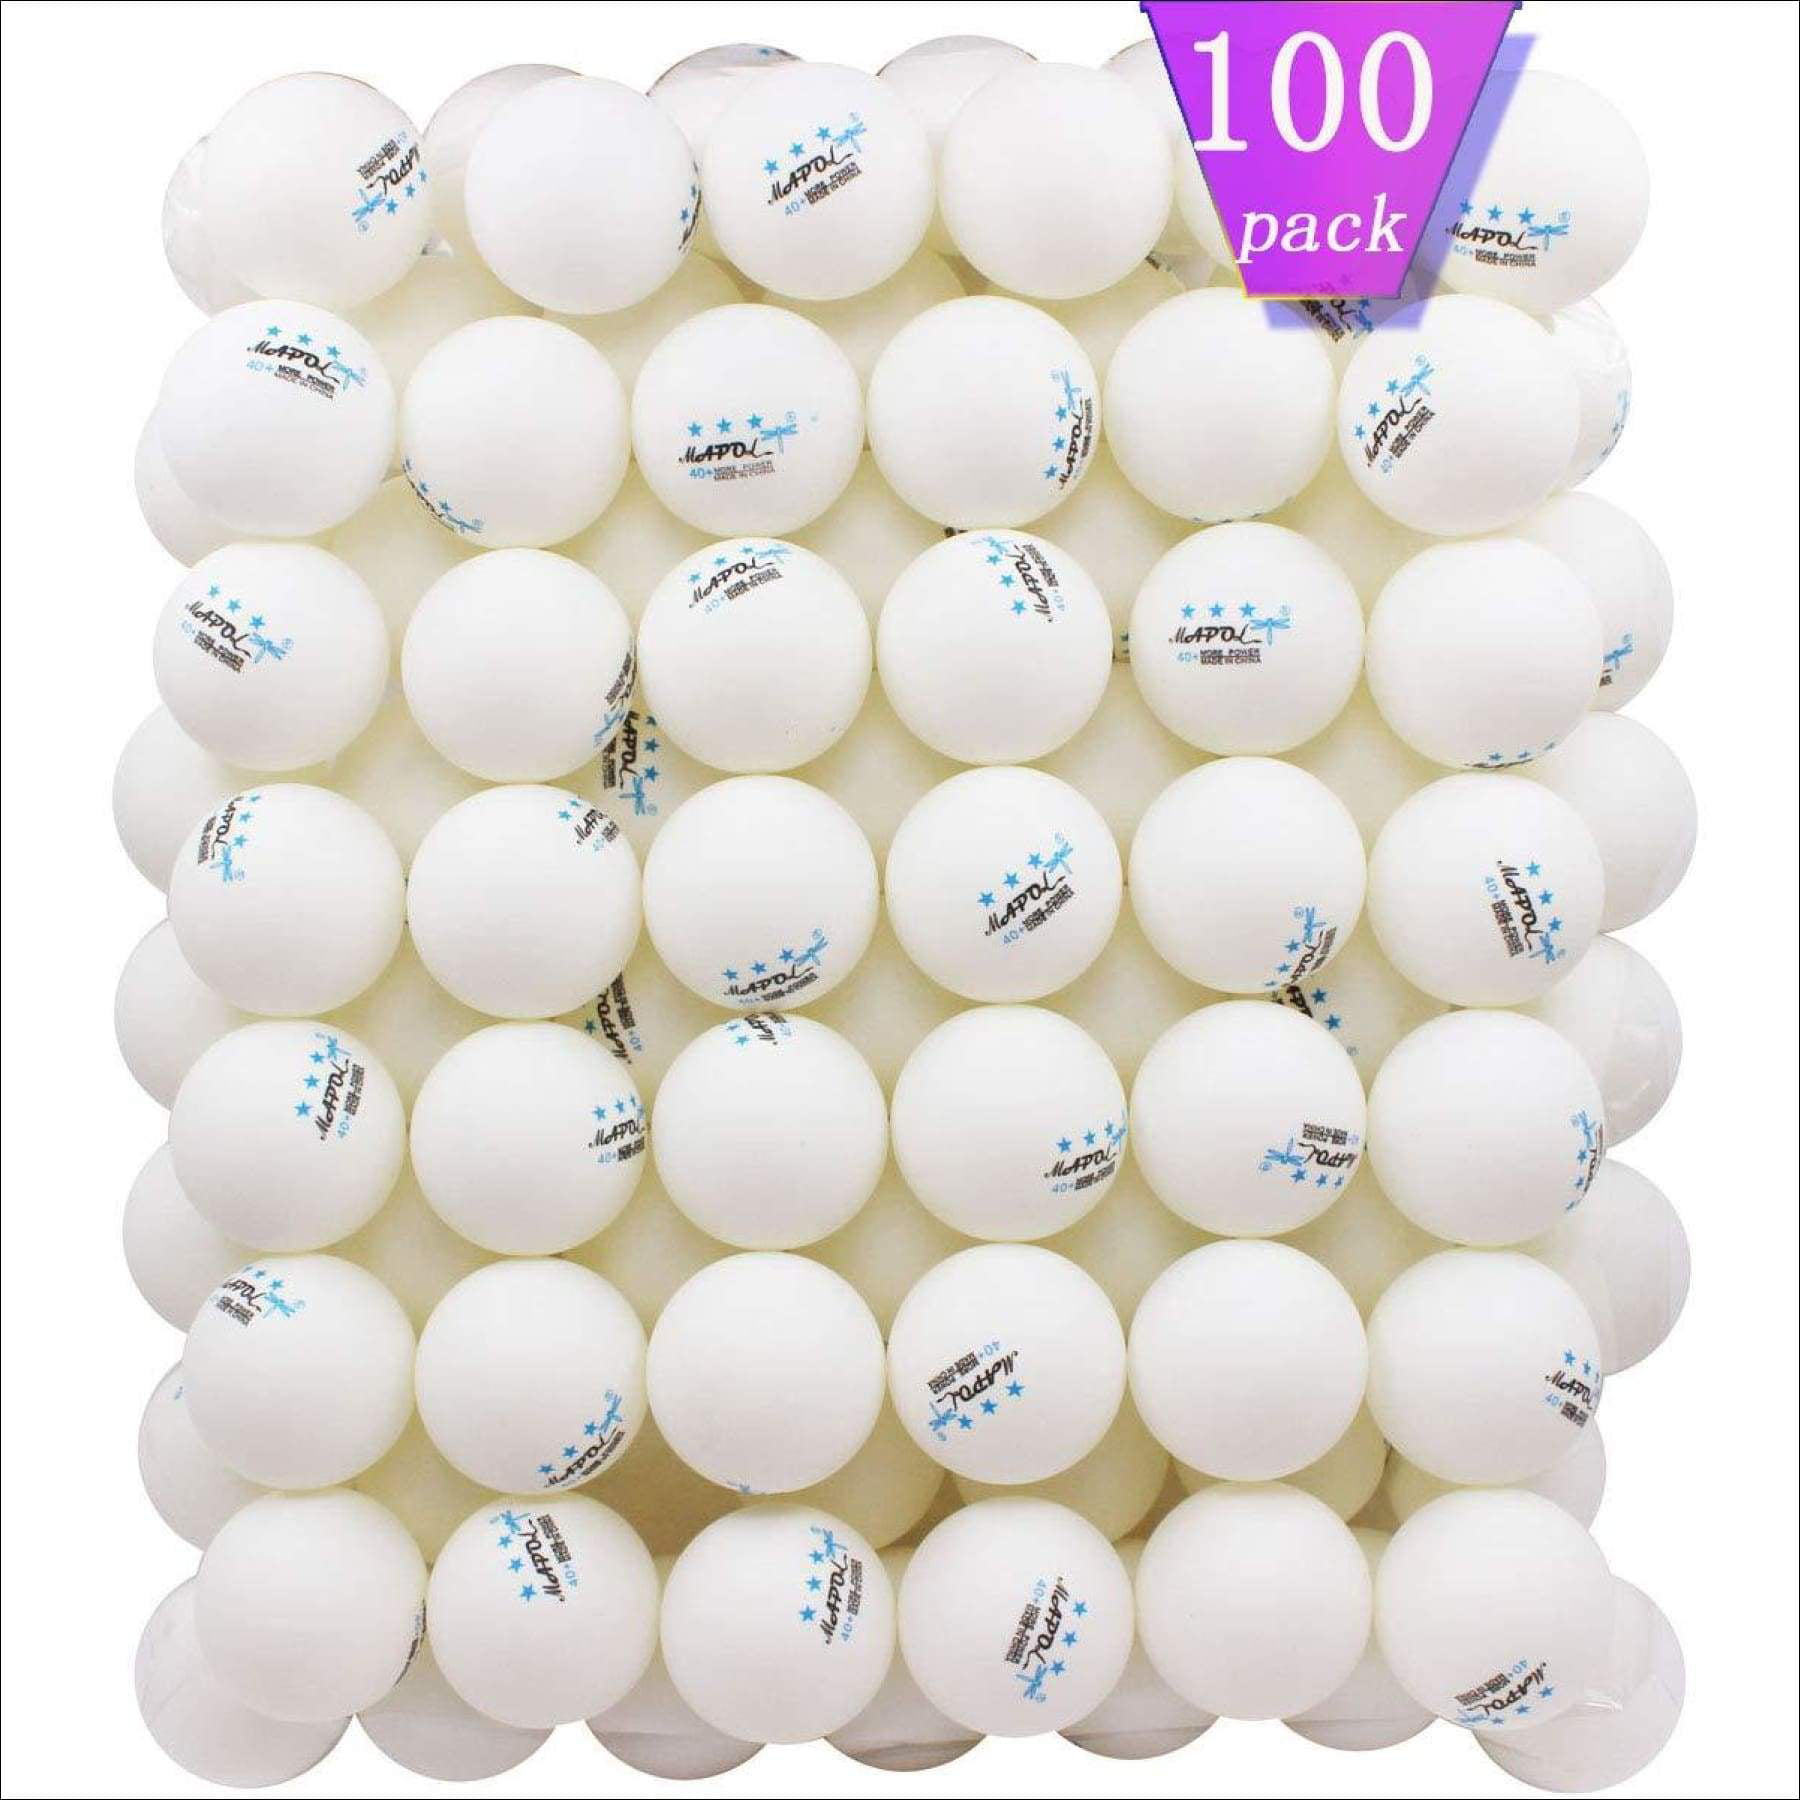 Pack of 144 White Stiga 2-Star Table Tennis Ball 